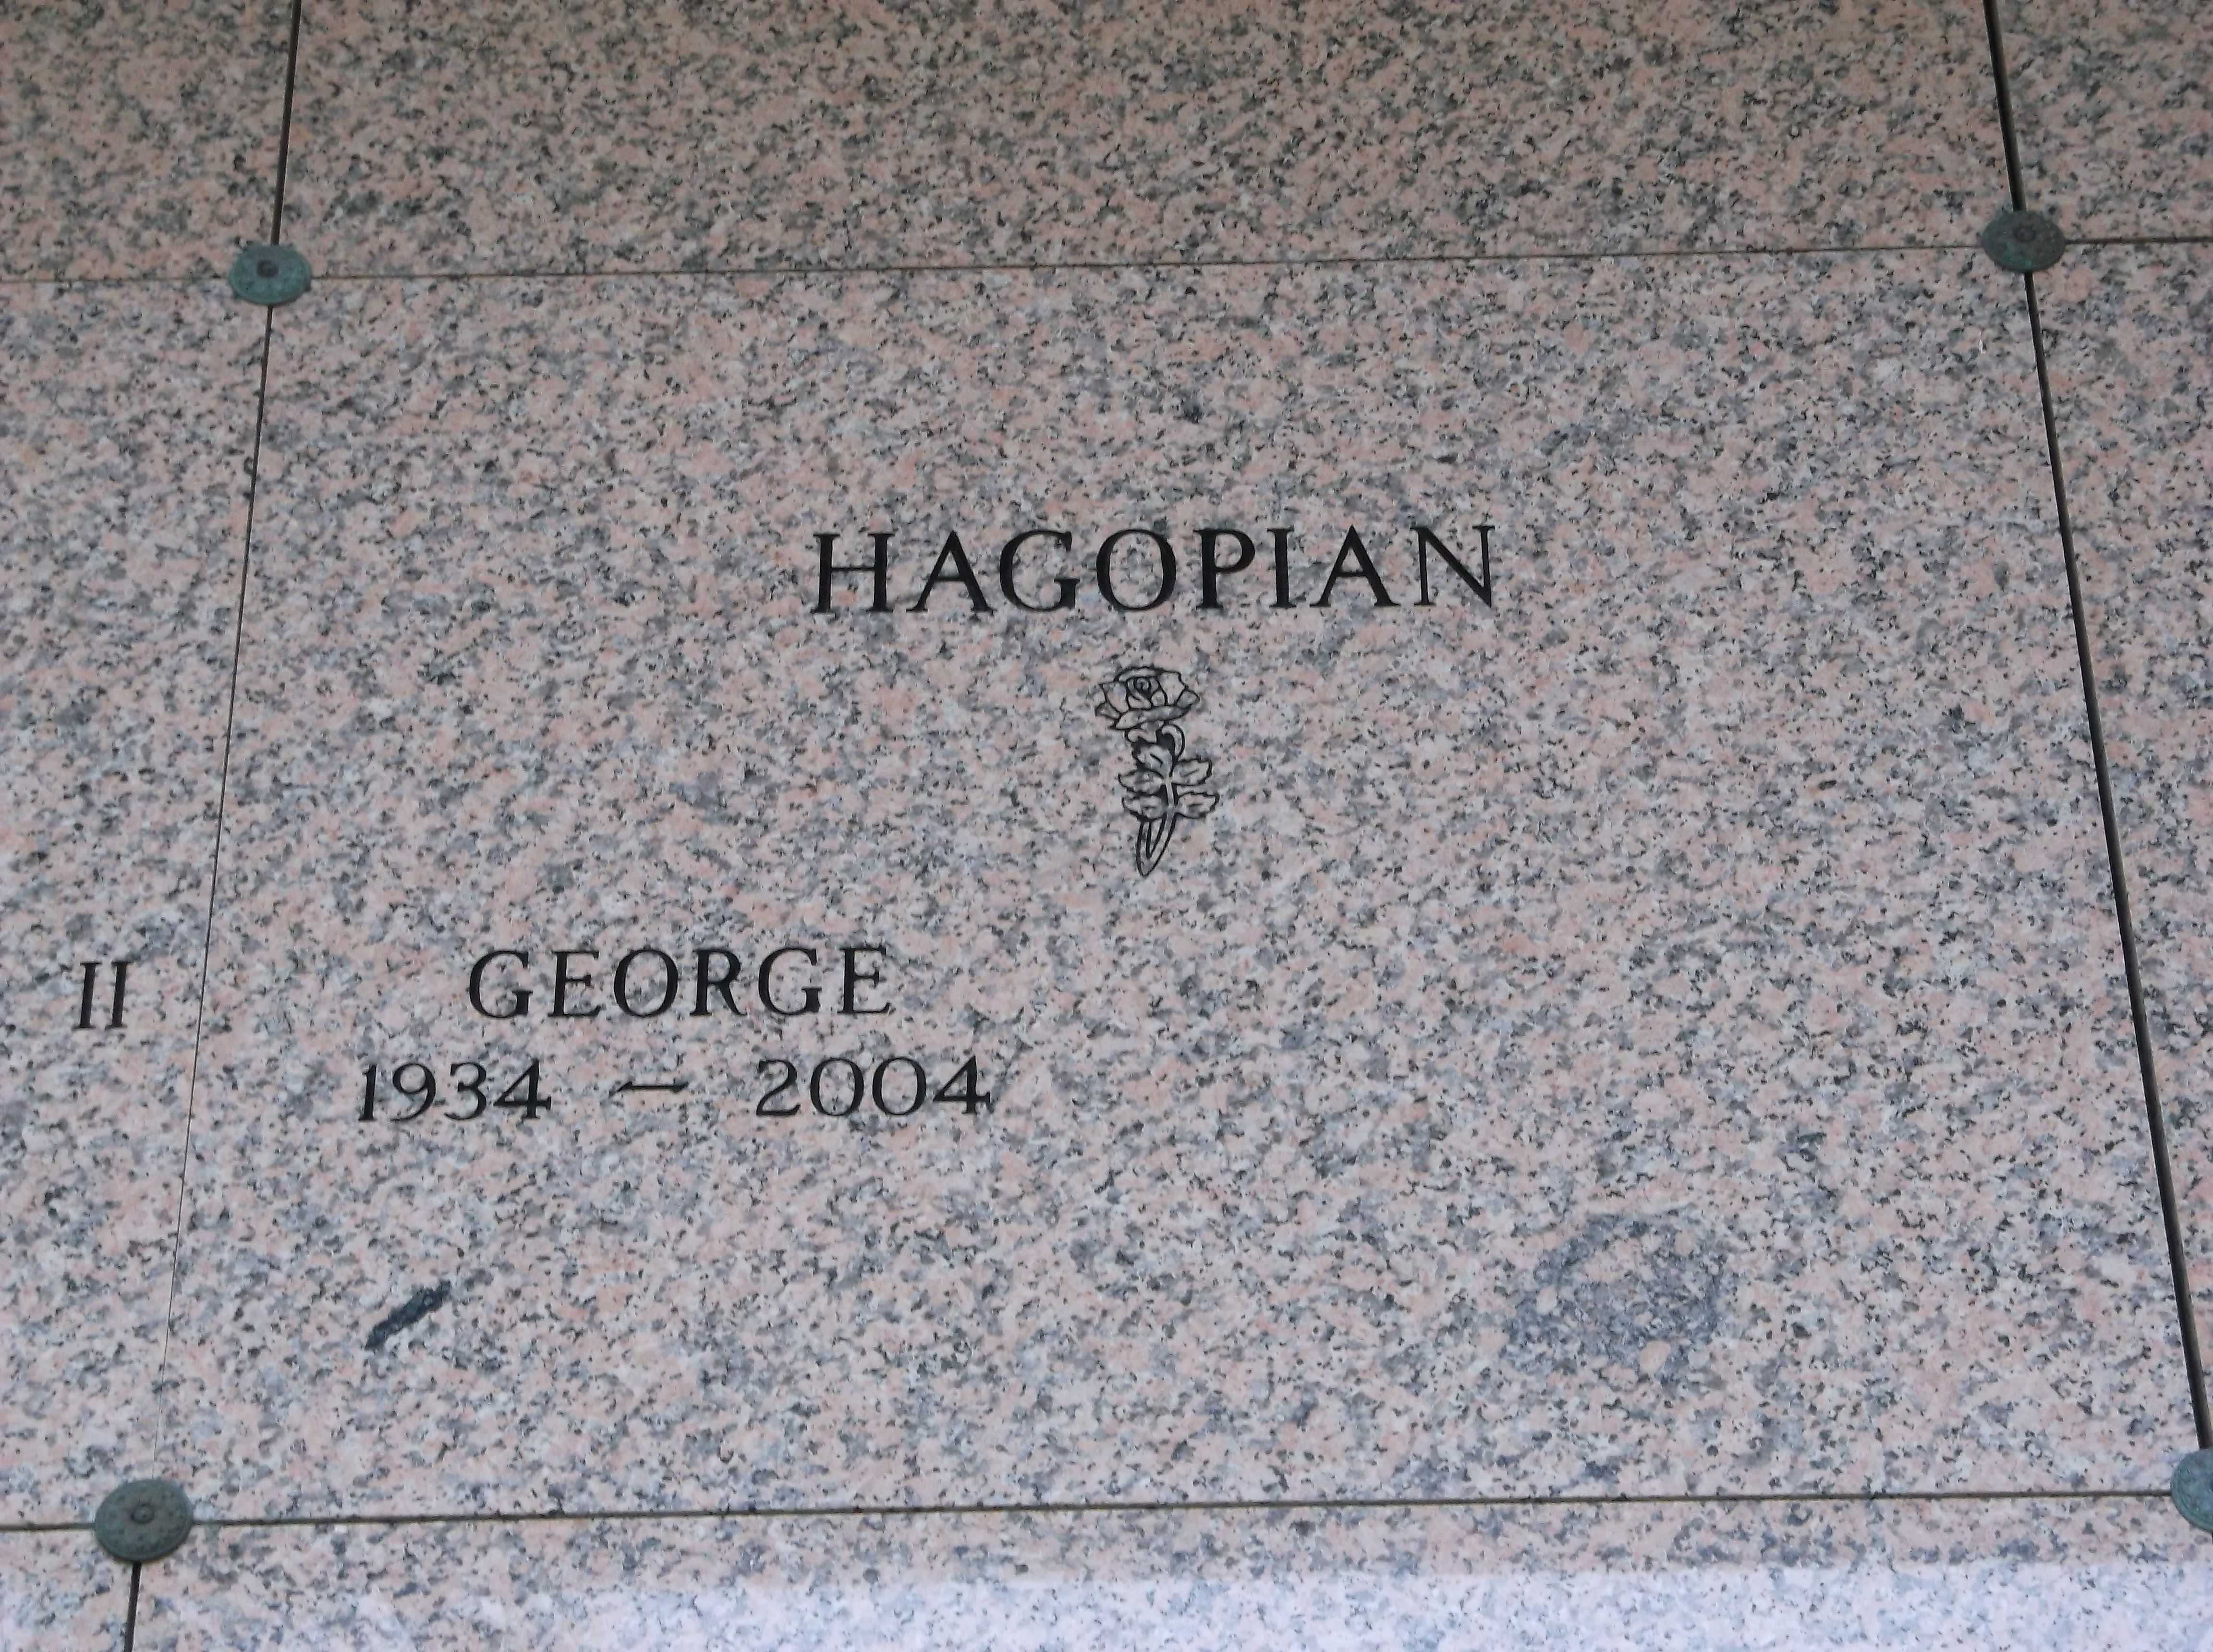 George Hagopian